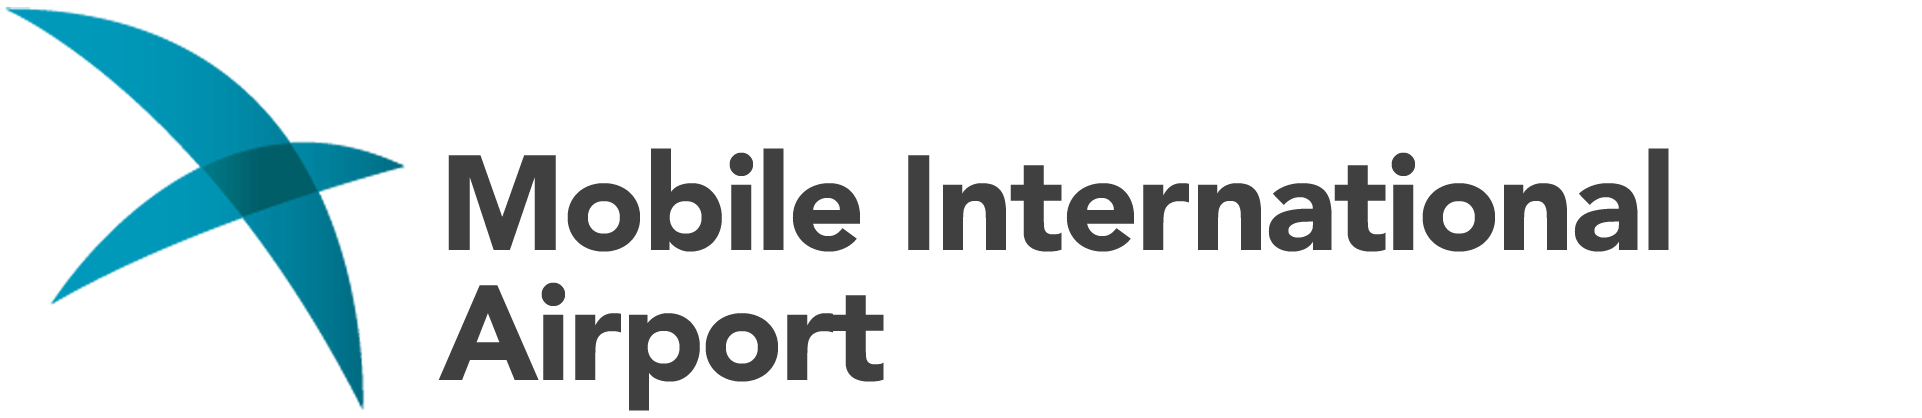 Mobile International Airport Logo